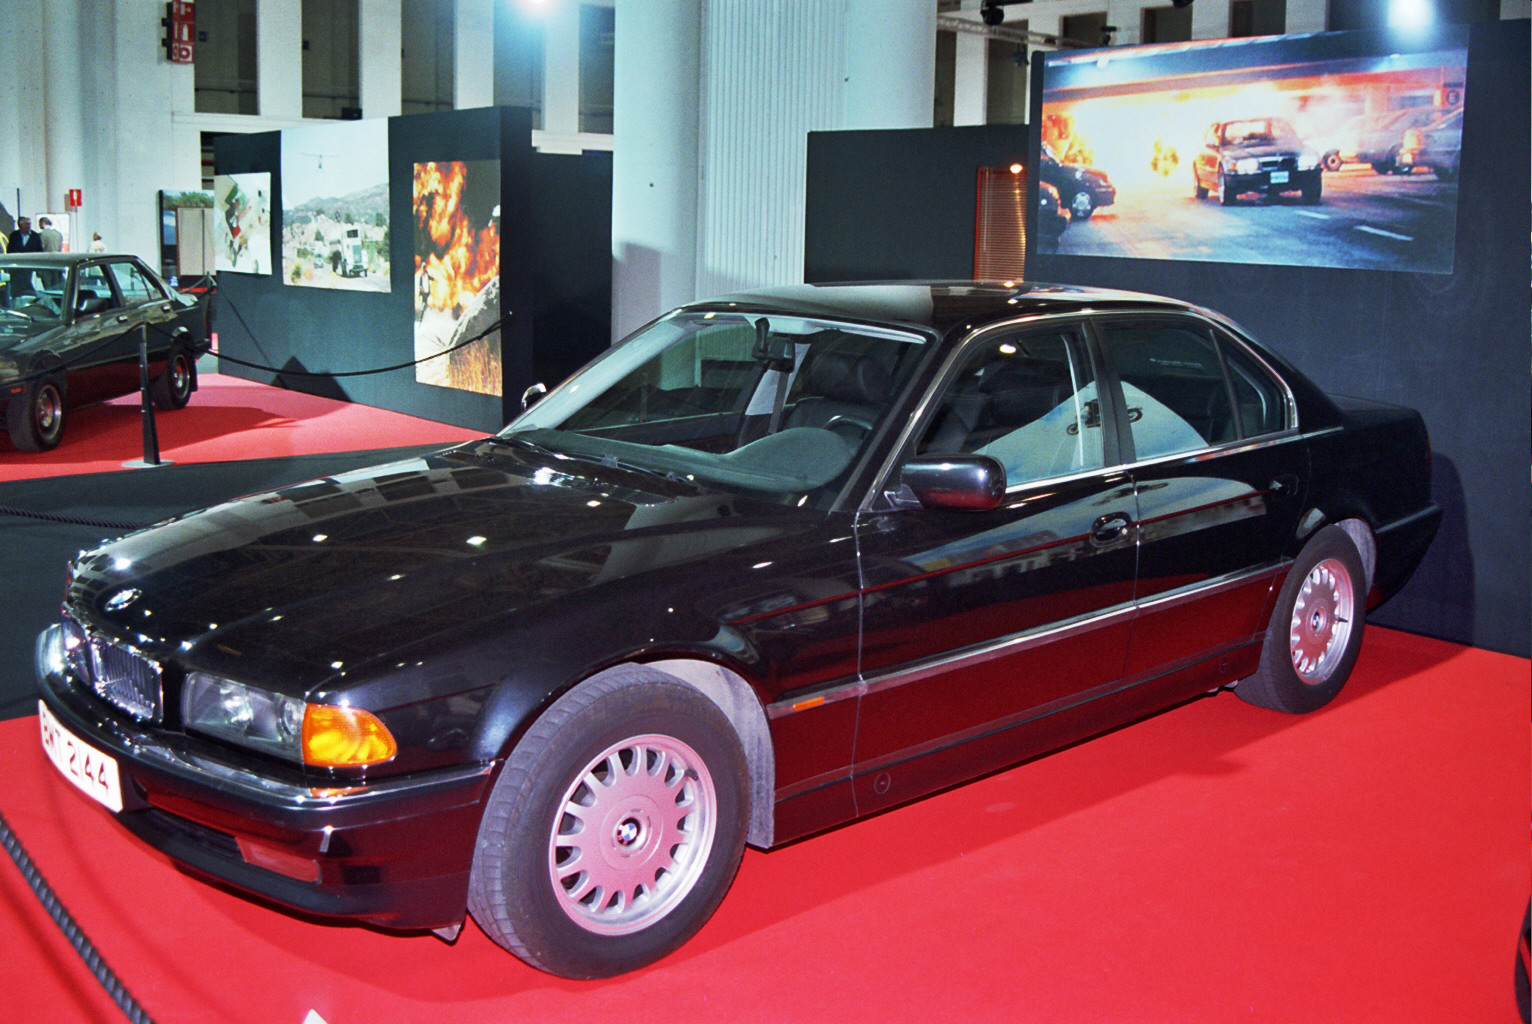 BMW 70 iL de la película Tomorrow Never Dies de 1997